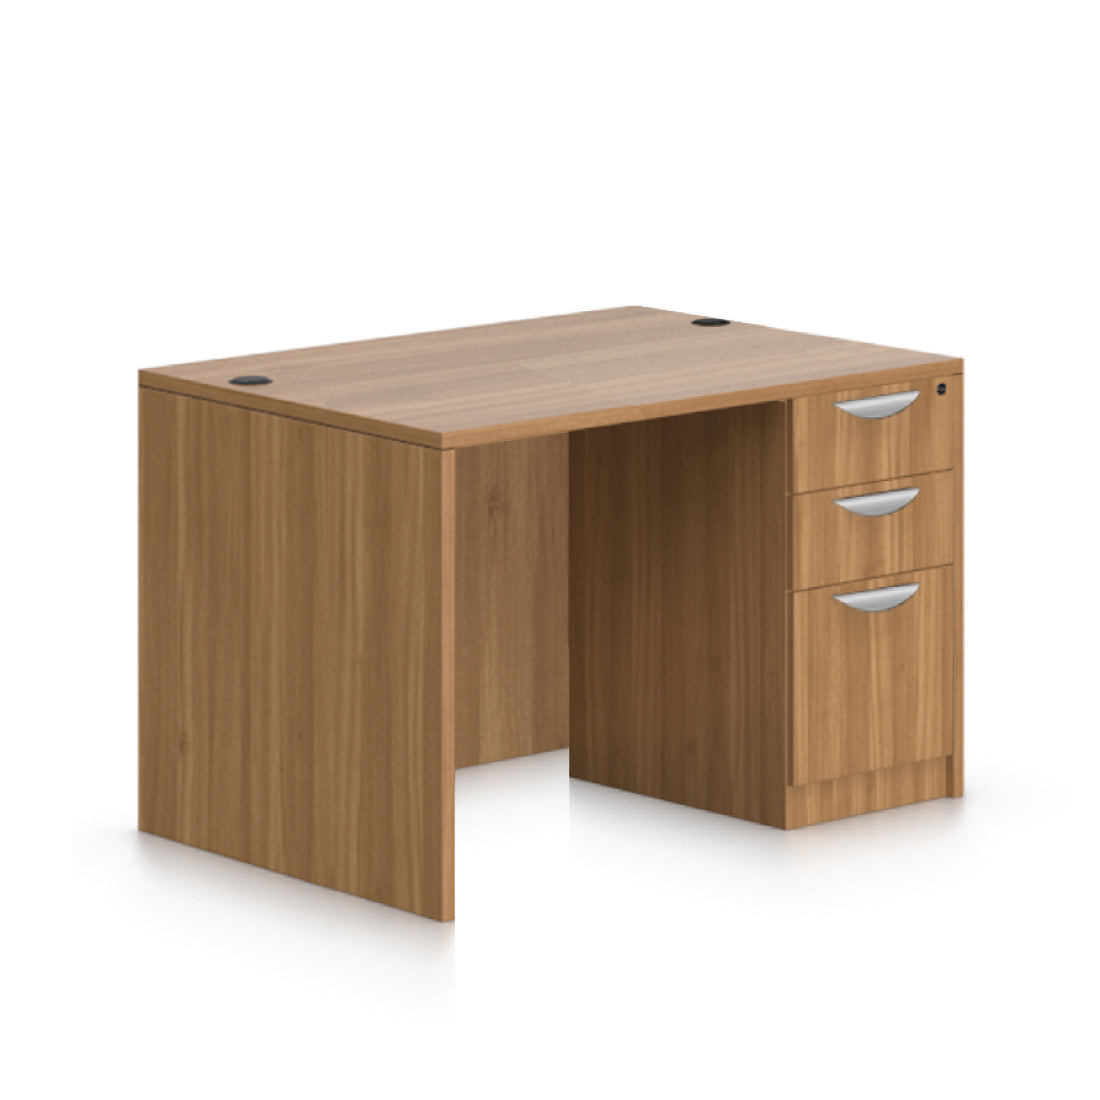 48"x30" Rectangular Desk with B/B/F pedestal - Kainosbuy.com